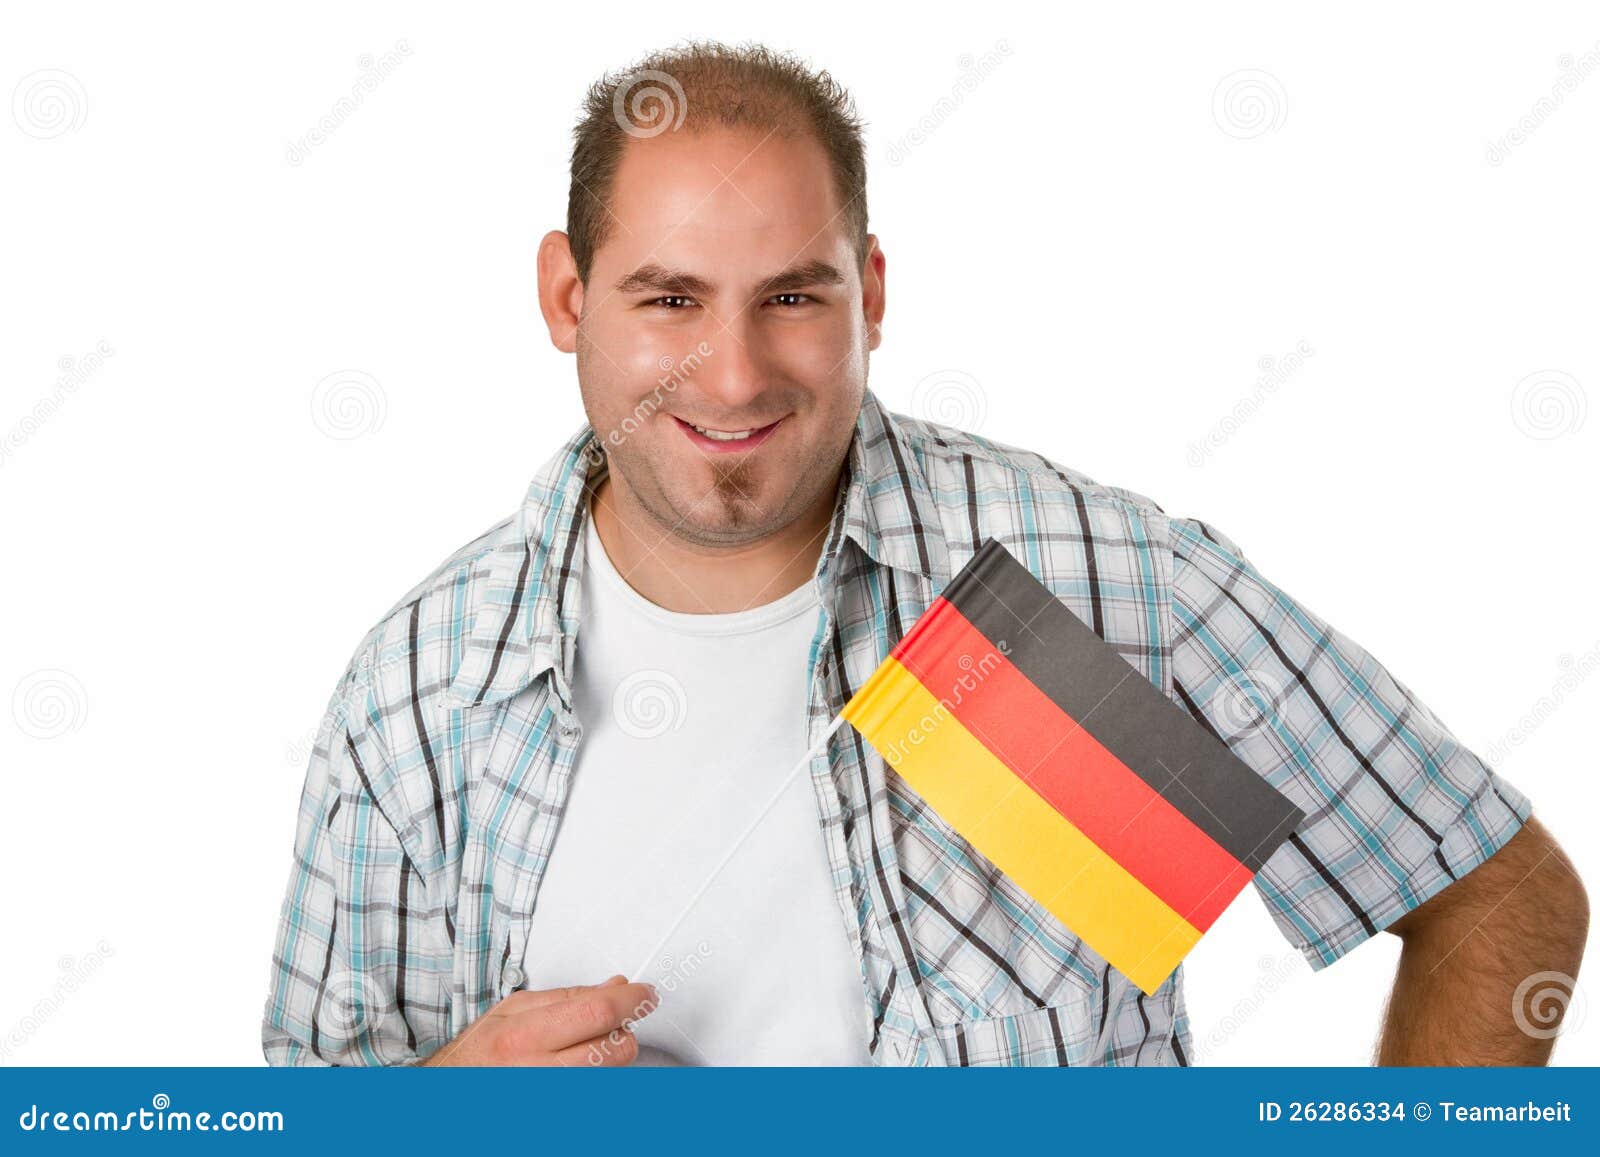 German fan stock photo. Image of isolated, cheerful, studio - 26286334